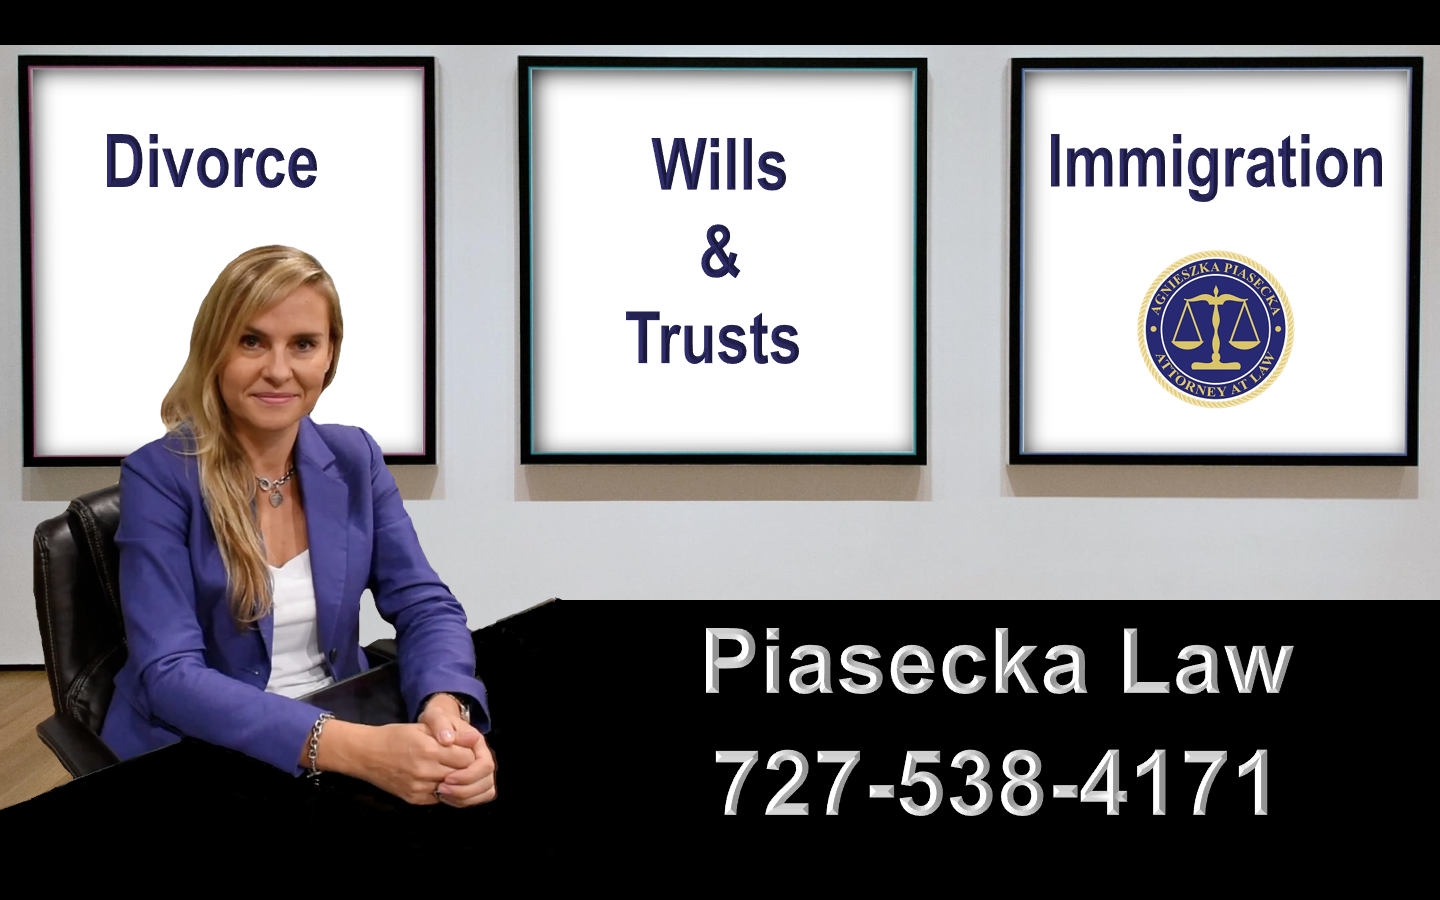 Divorce Wills & Trusts Immigration Attorney Agnieszka Aga Piasecka Law Florida